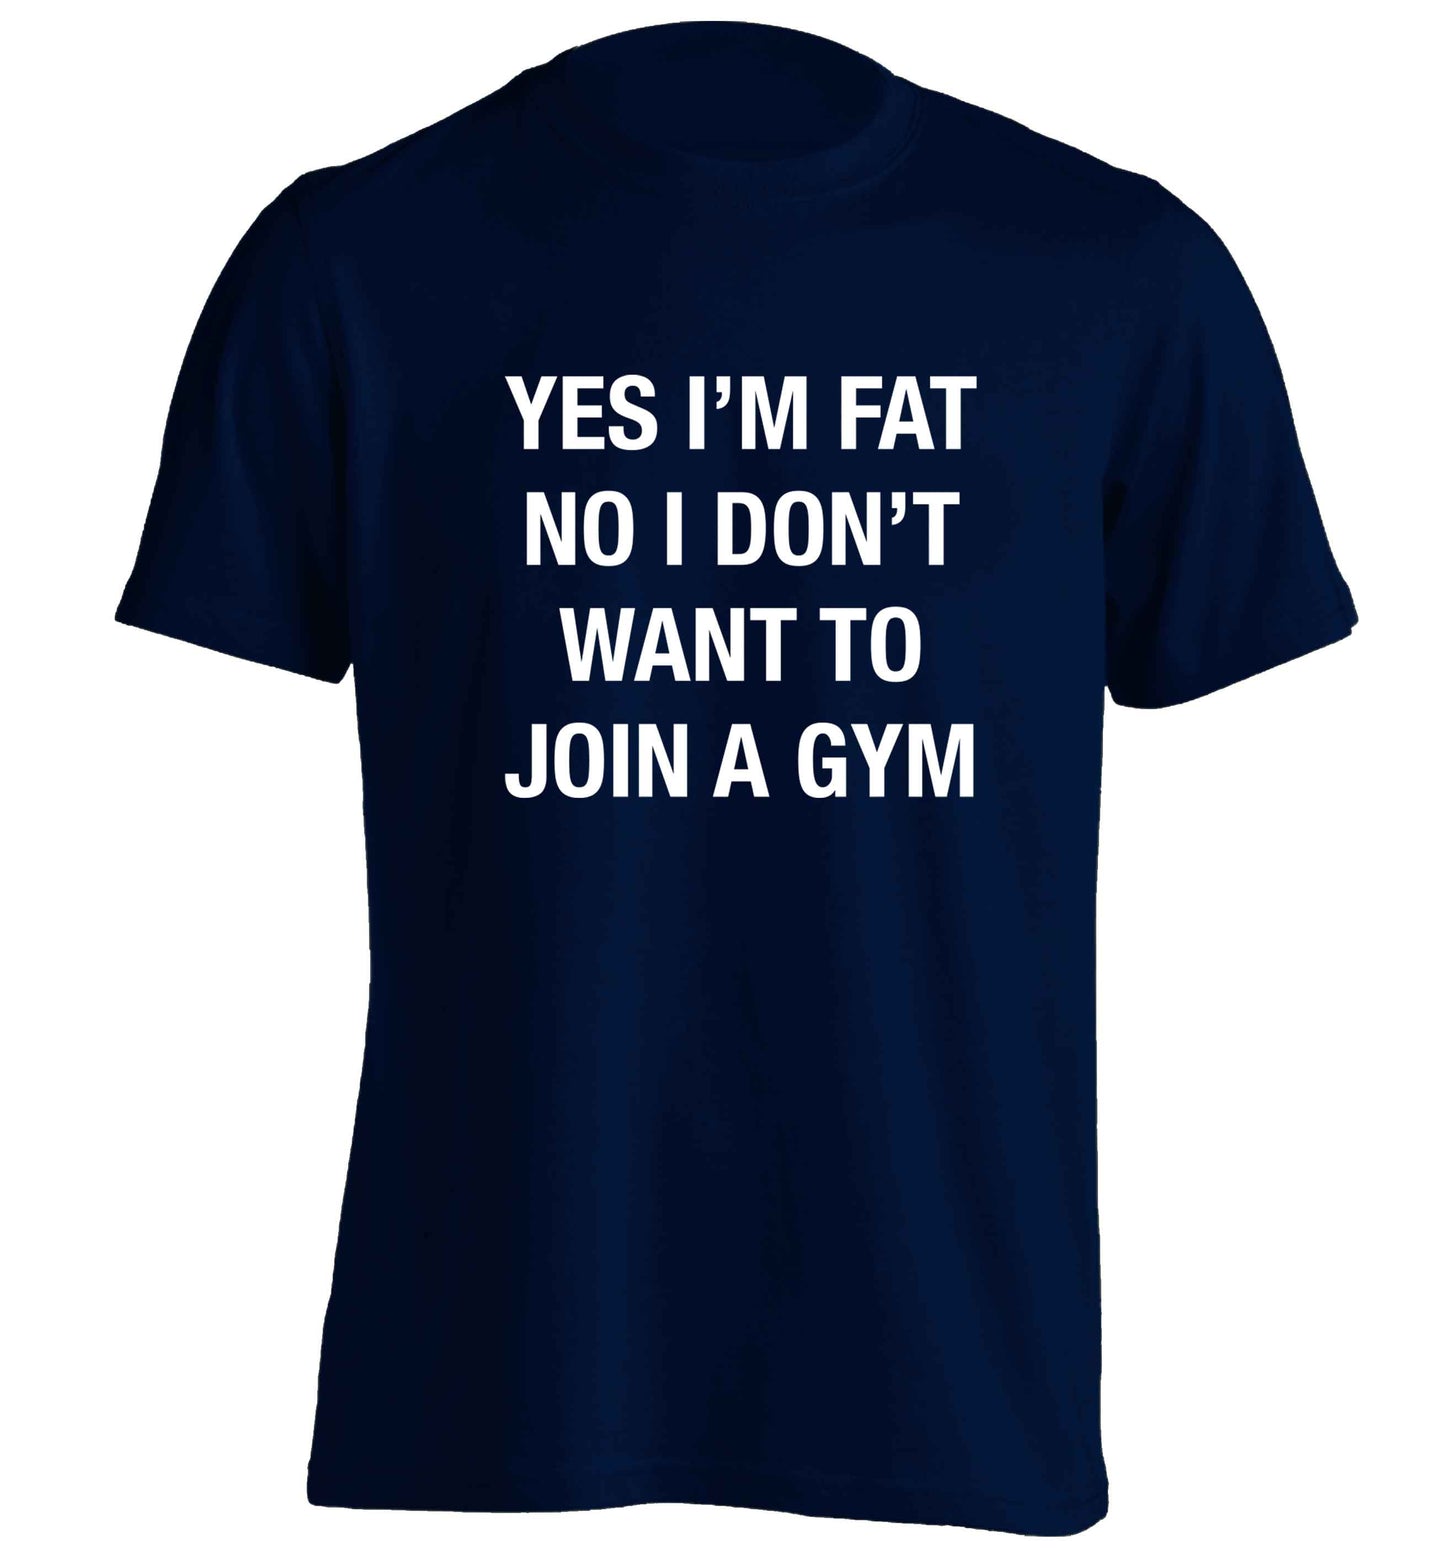 Yes I'm fat, no I don't want to go to the gym adults unisex navy Tshirt 2XL